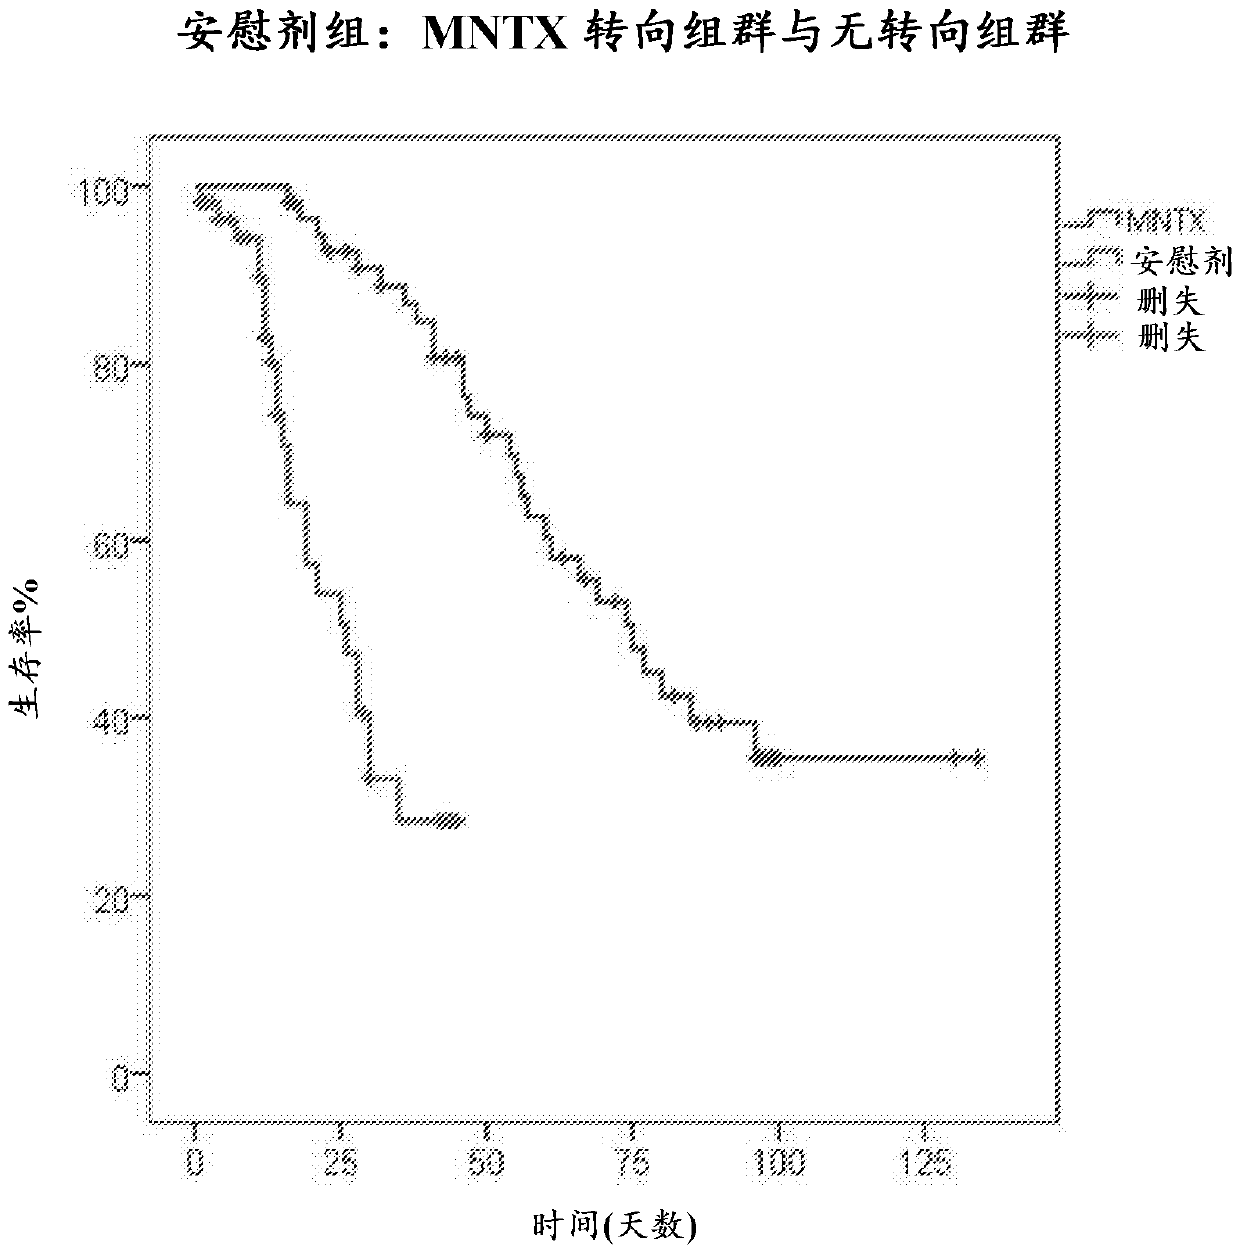 Use of methylnaltrexone to attenuate tumor progression